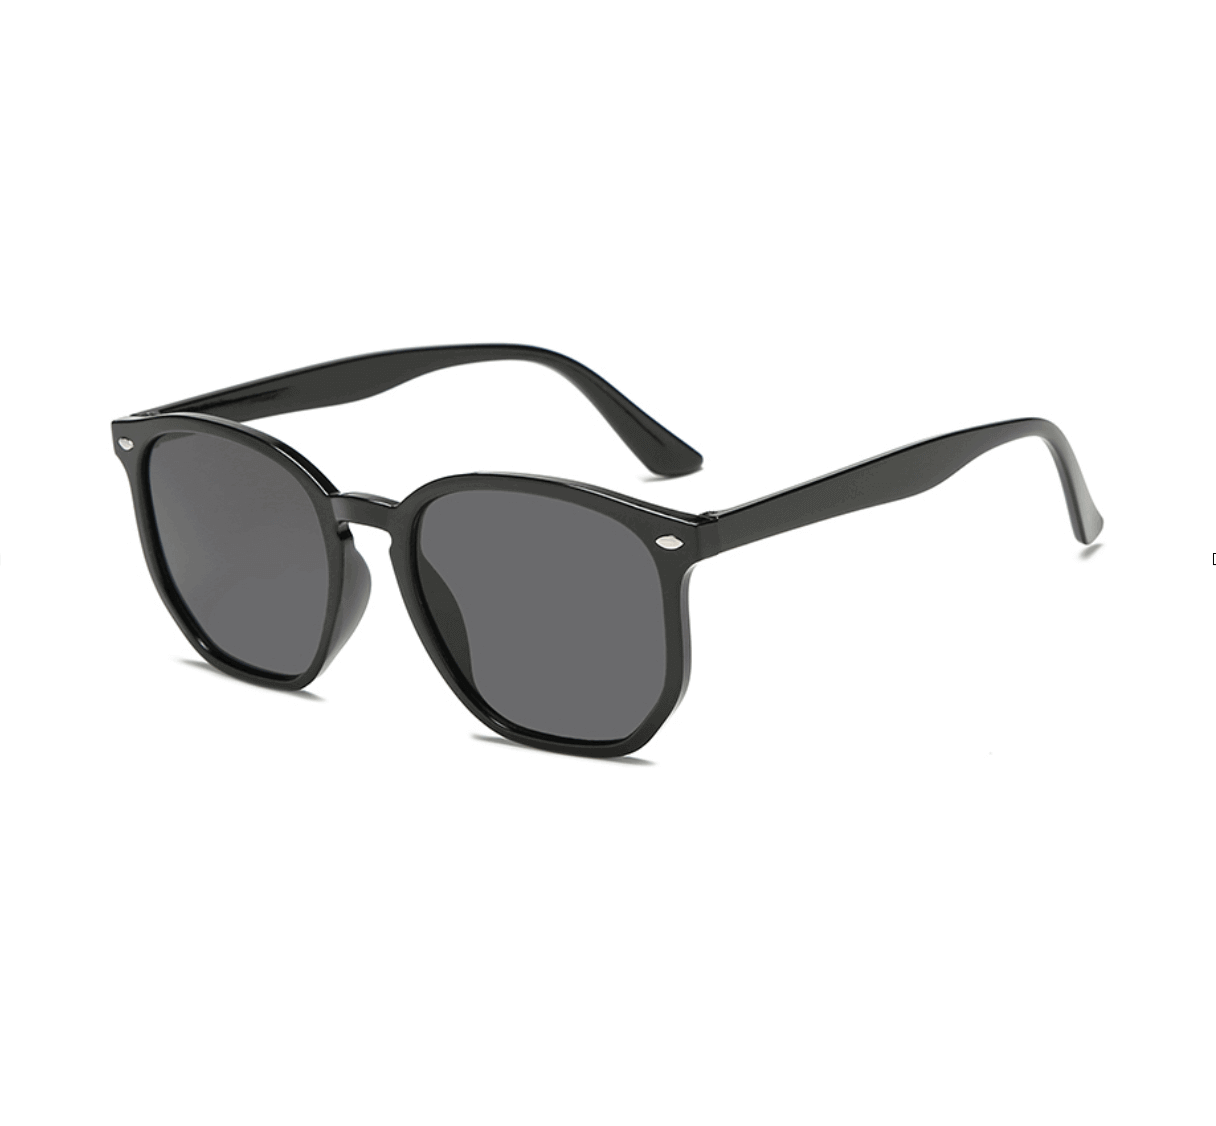 wholesale plastic sunglasses, bulk plastic sunglasses, plastic sunglasses manufacturers, Wholesale sunglasses vendors, sunglasses supplier